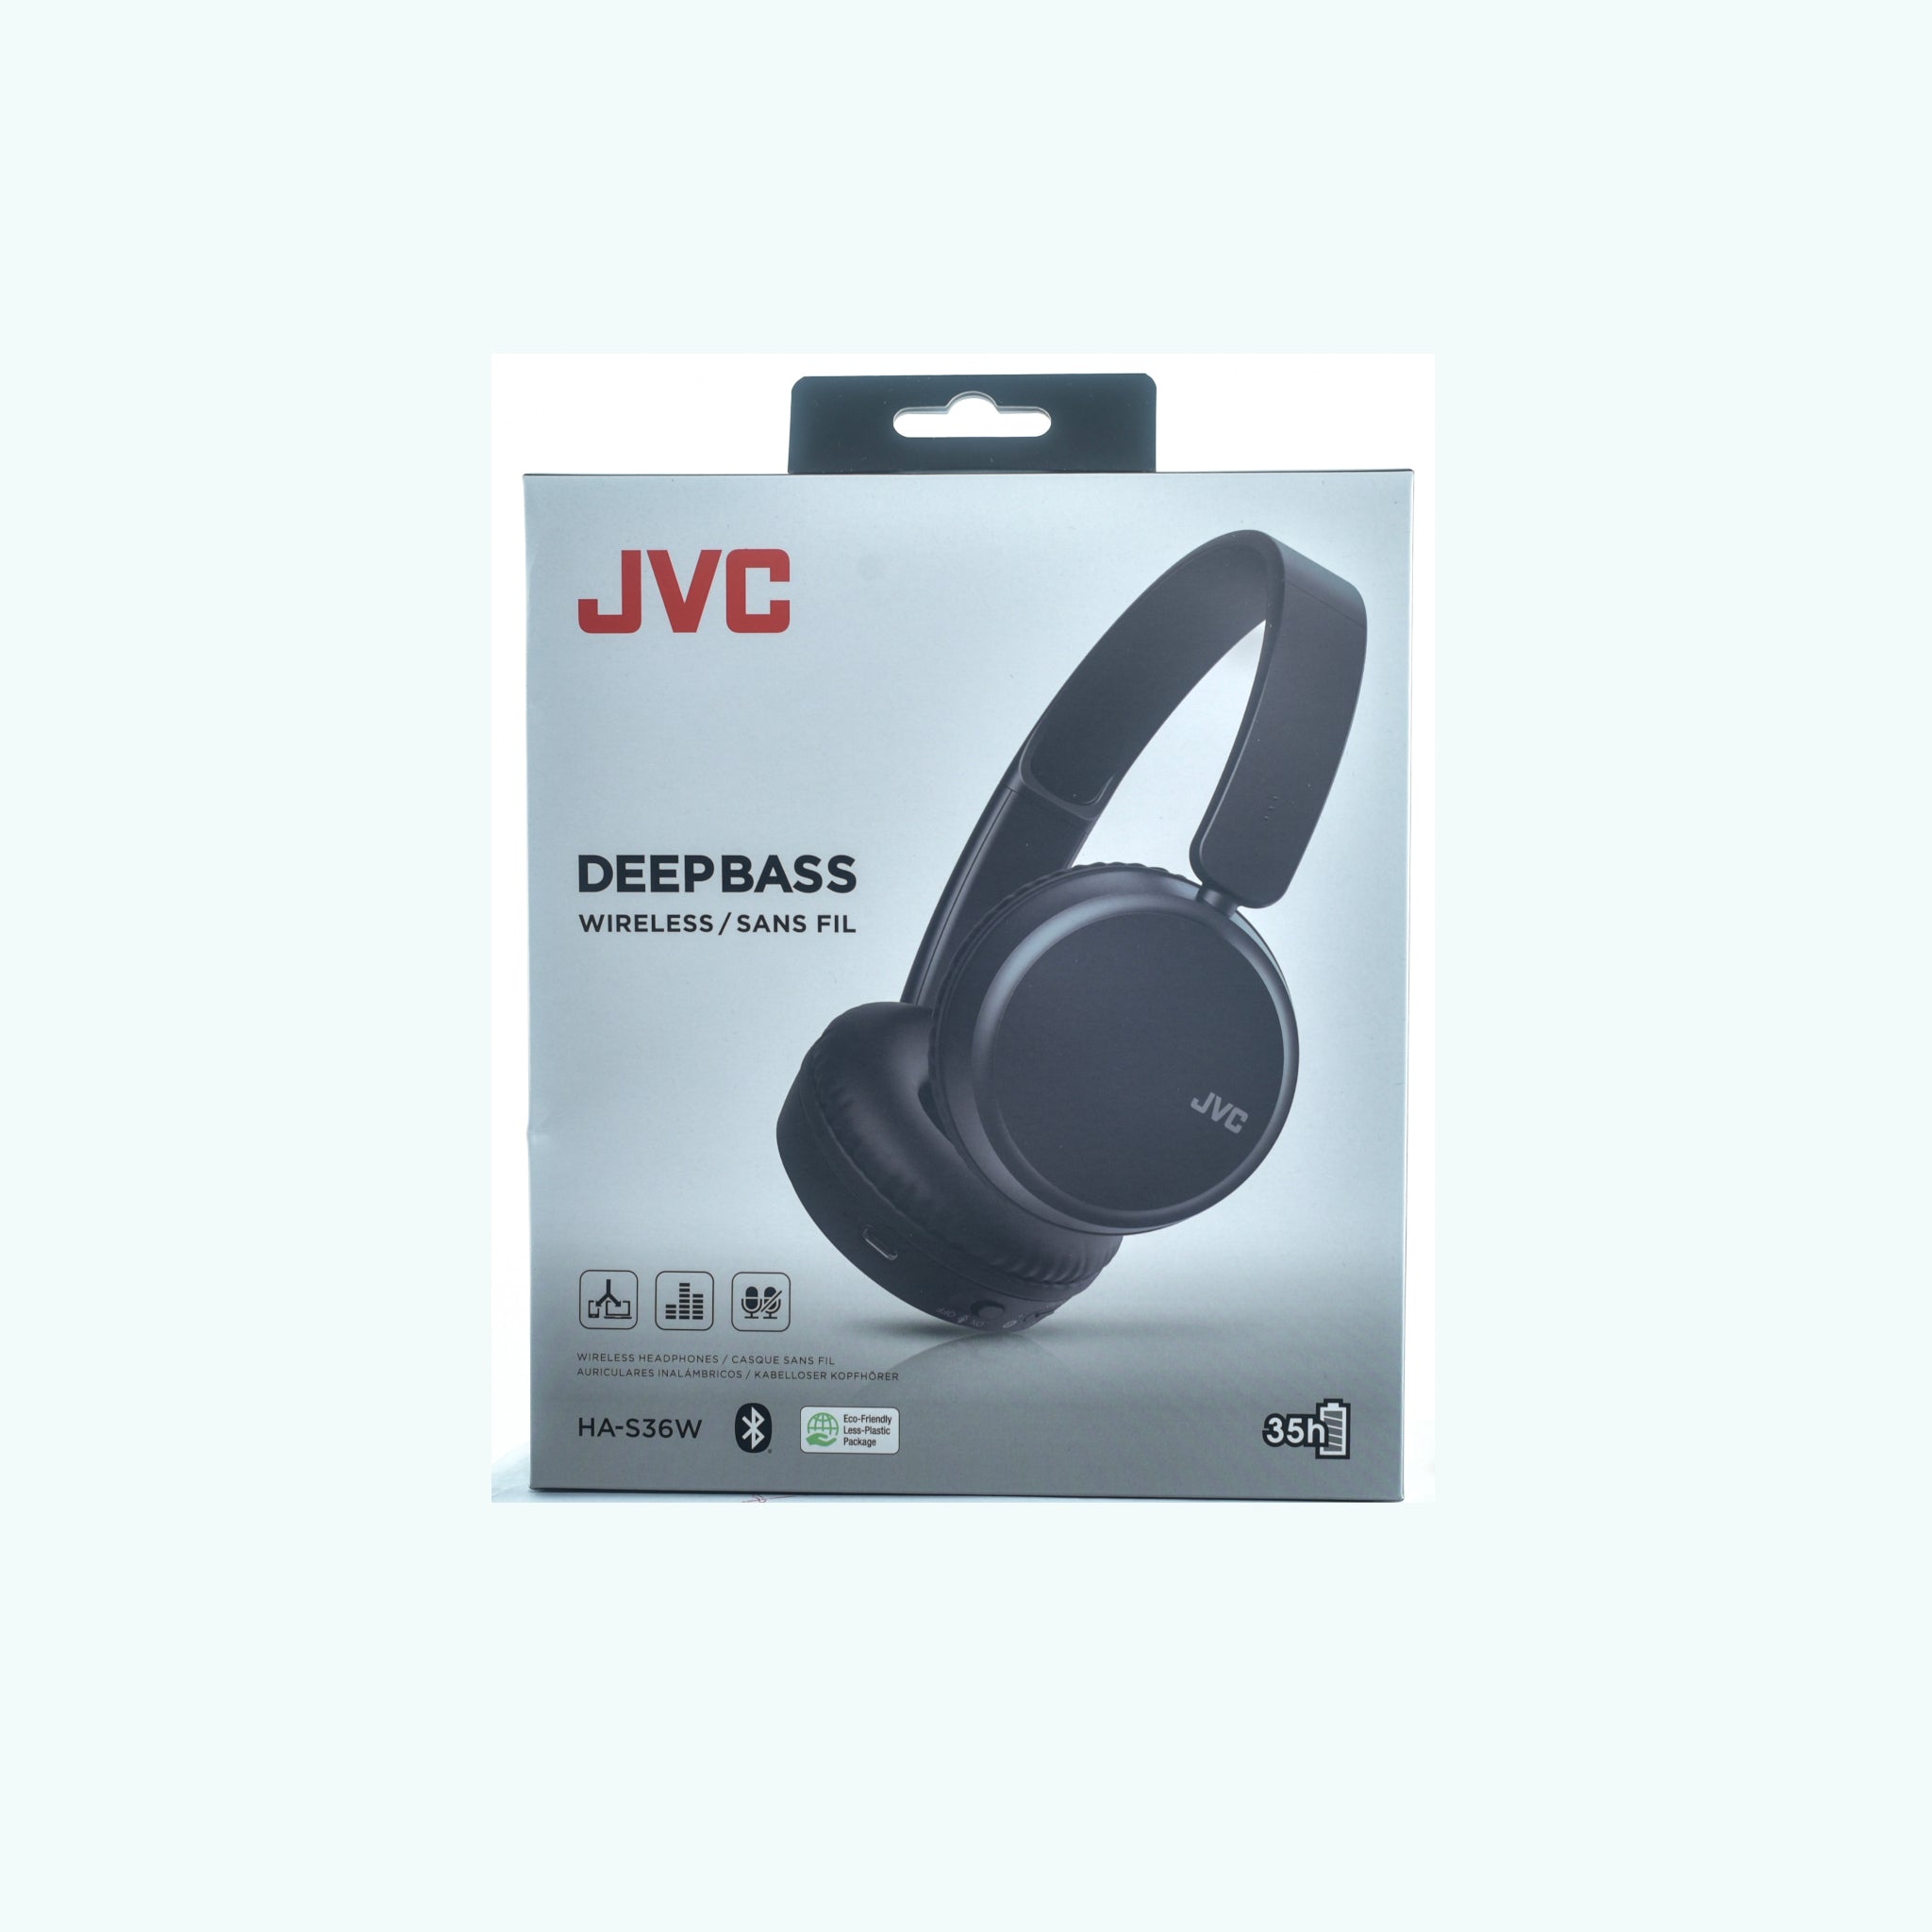 JVC Deepbass HA-S36W Wireless Headphones